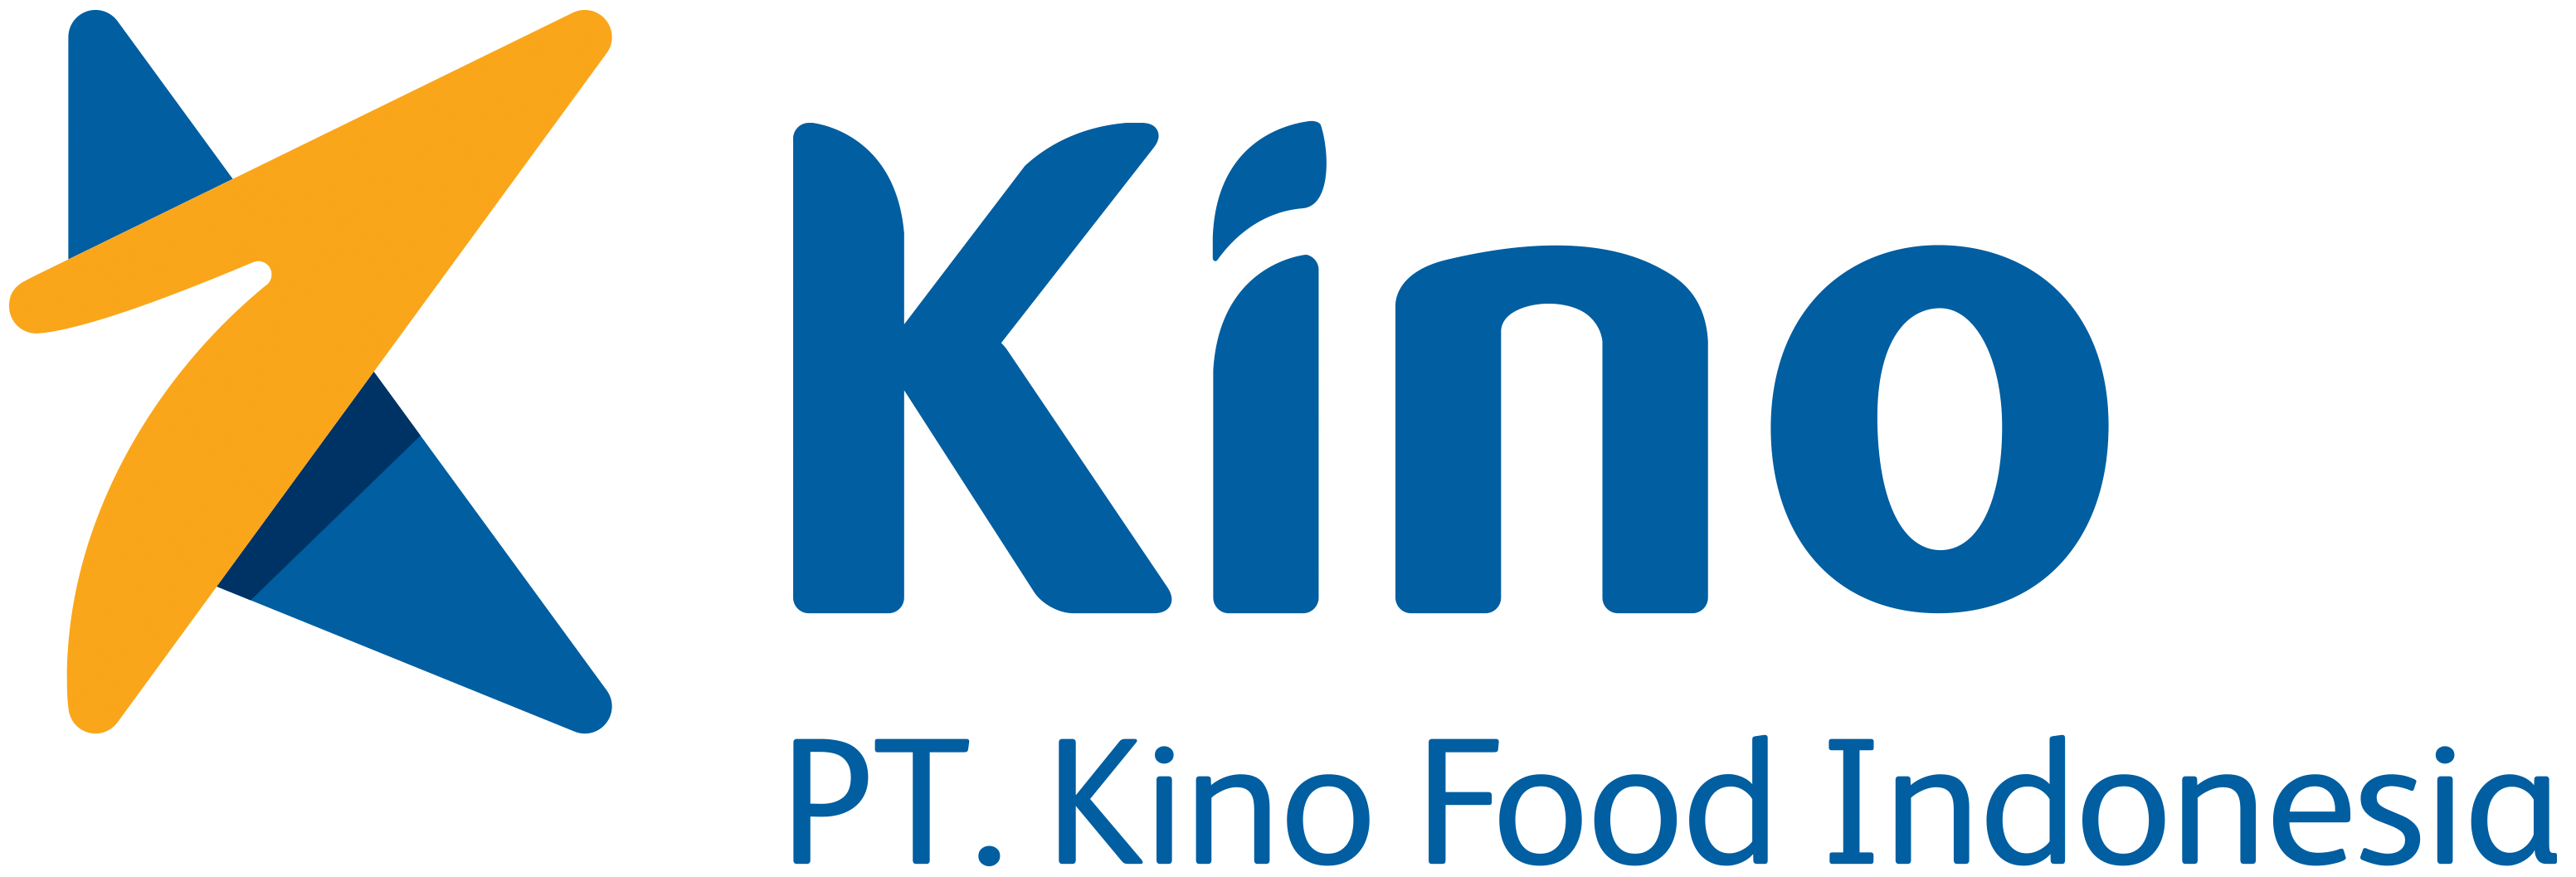 Kino Food Indonesia | Innovate Today, Create Tomorrow